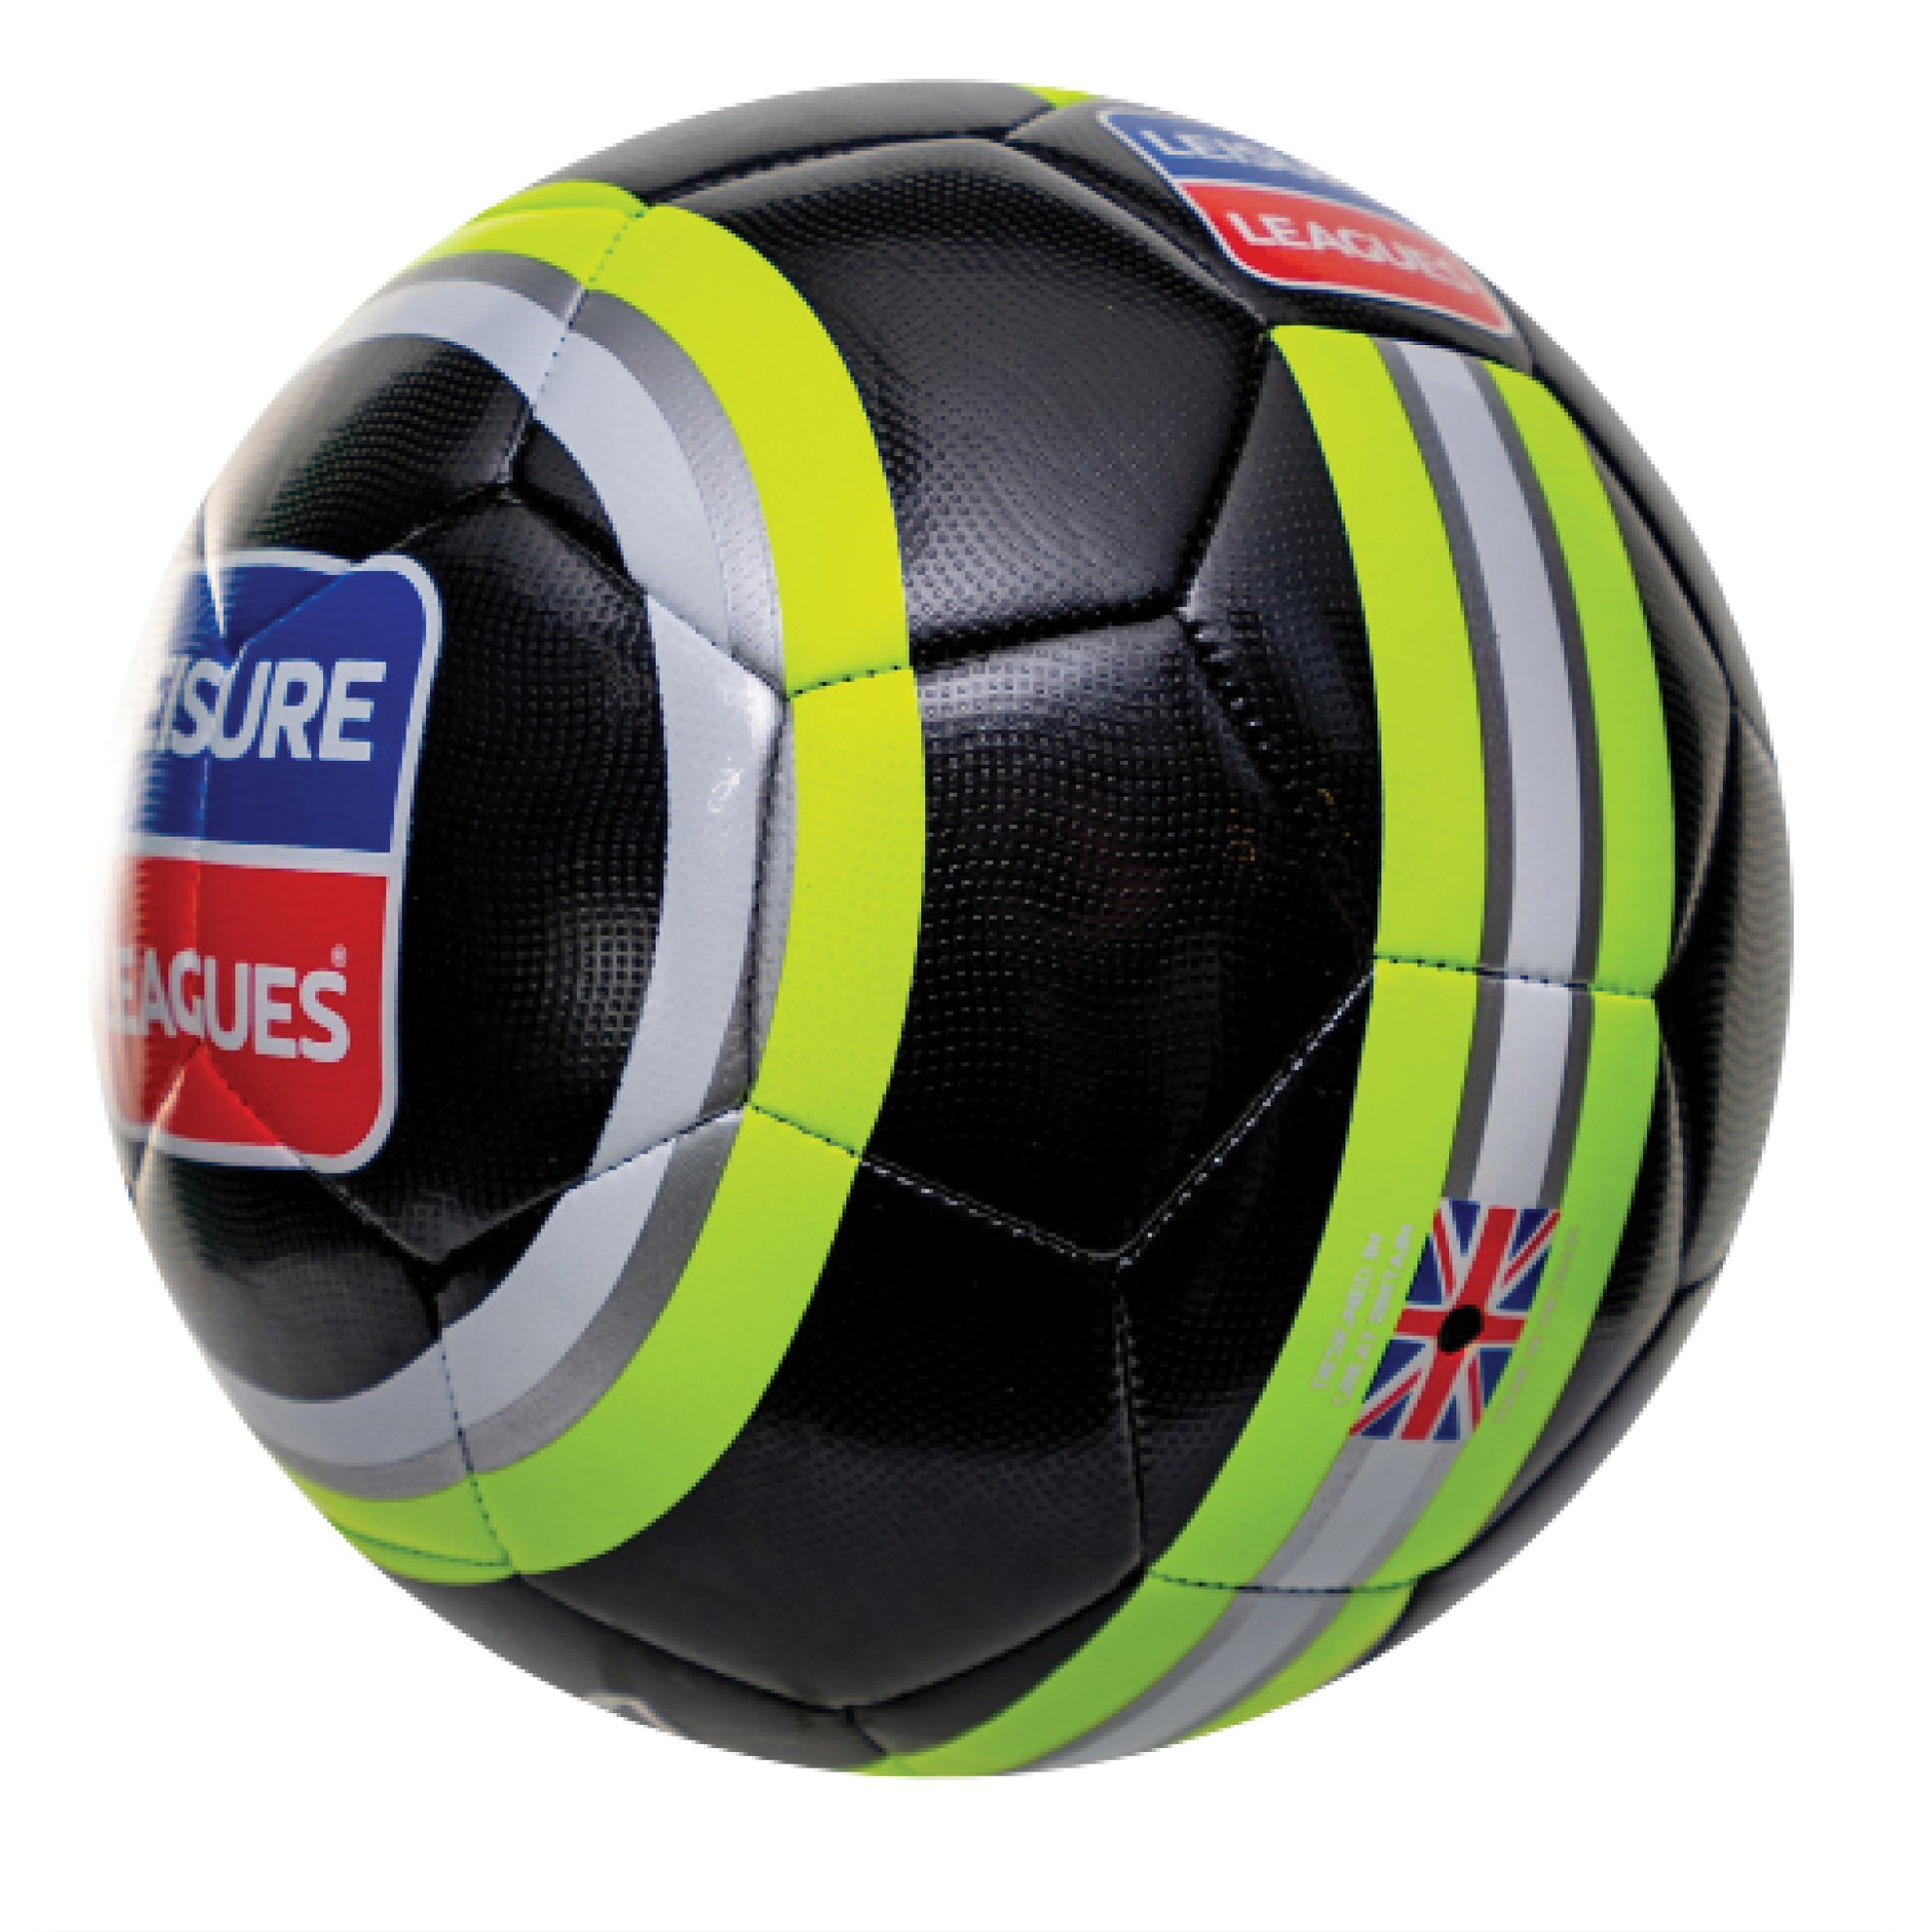 Leisure leagues football Size 5 Ball Black 